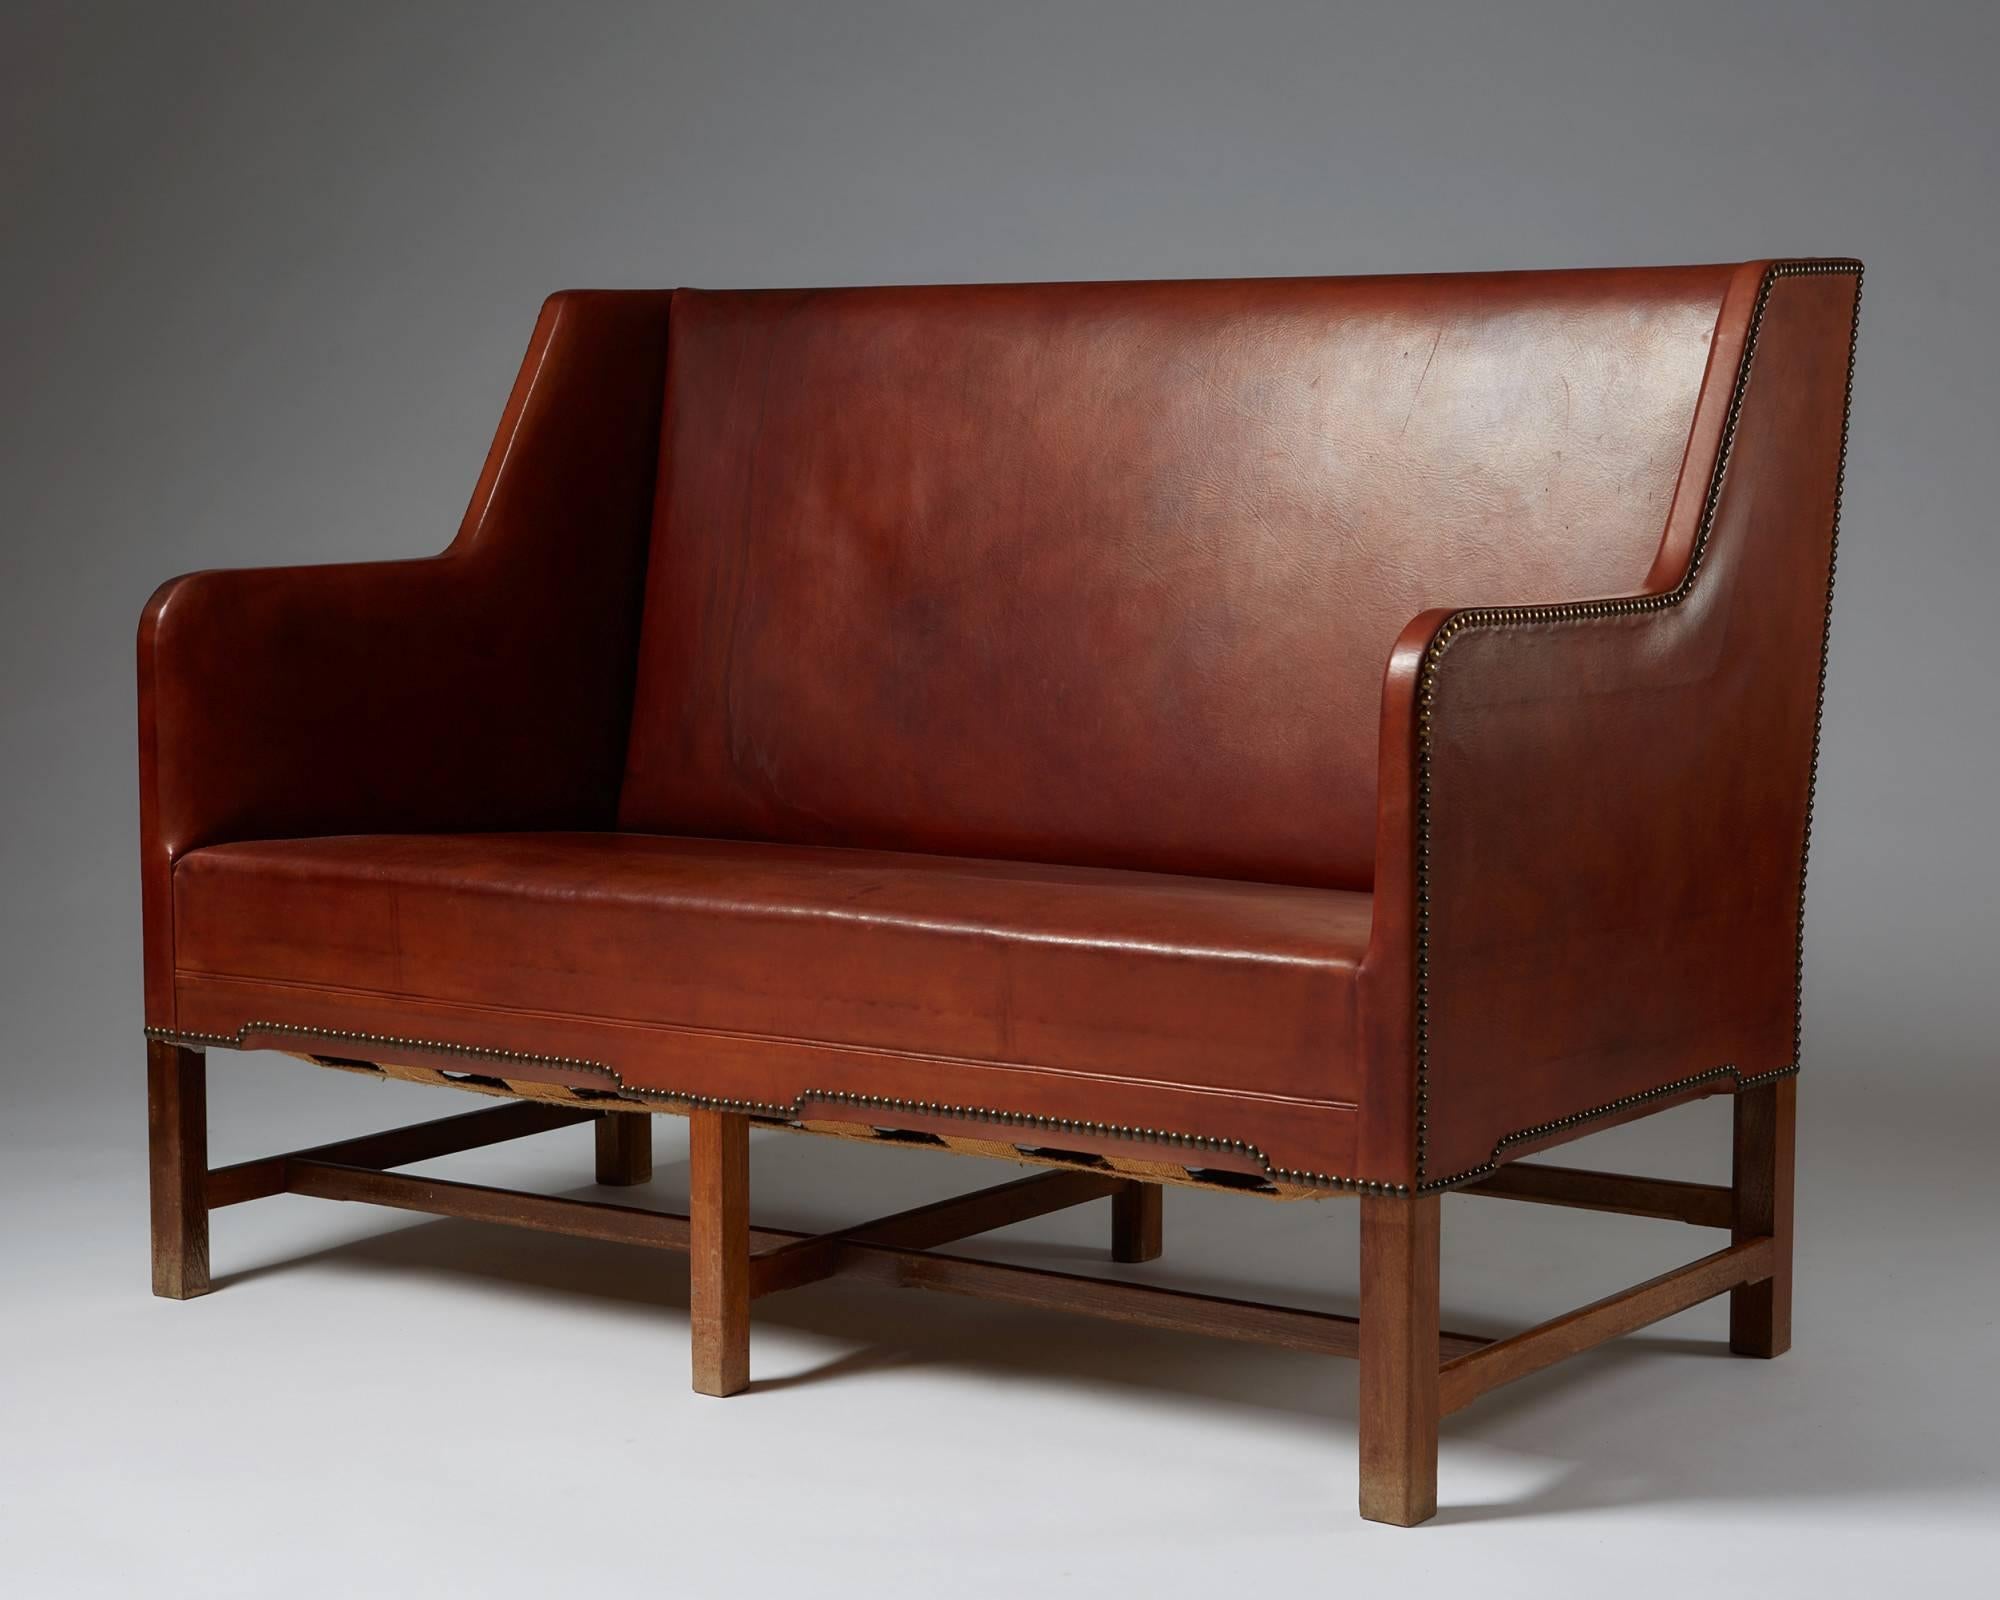 Scandinavian Modern Sofa Model 5011 Designed by Kaare Klint for Rud Rasmussen, Denmark, 1935